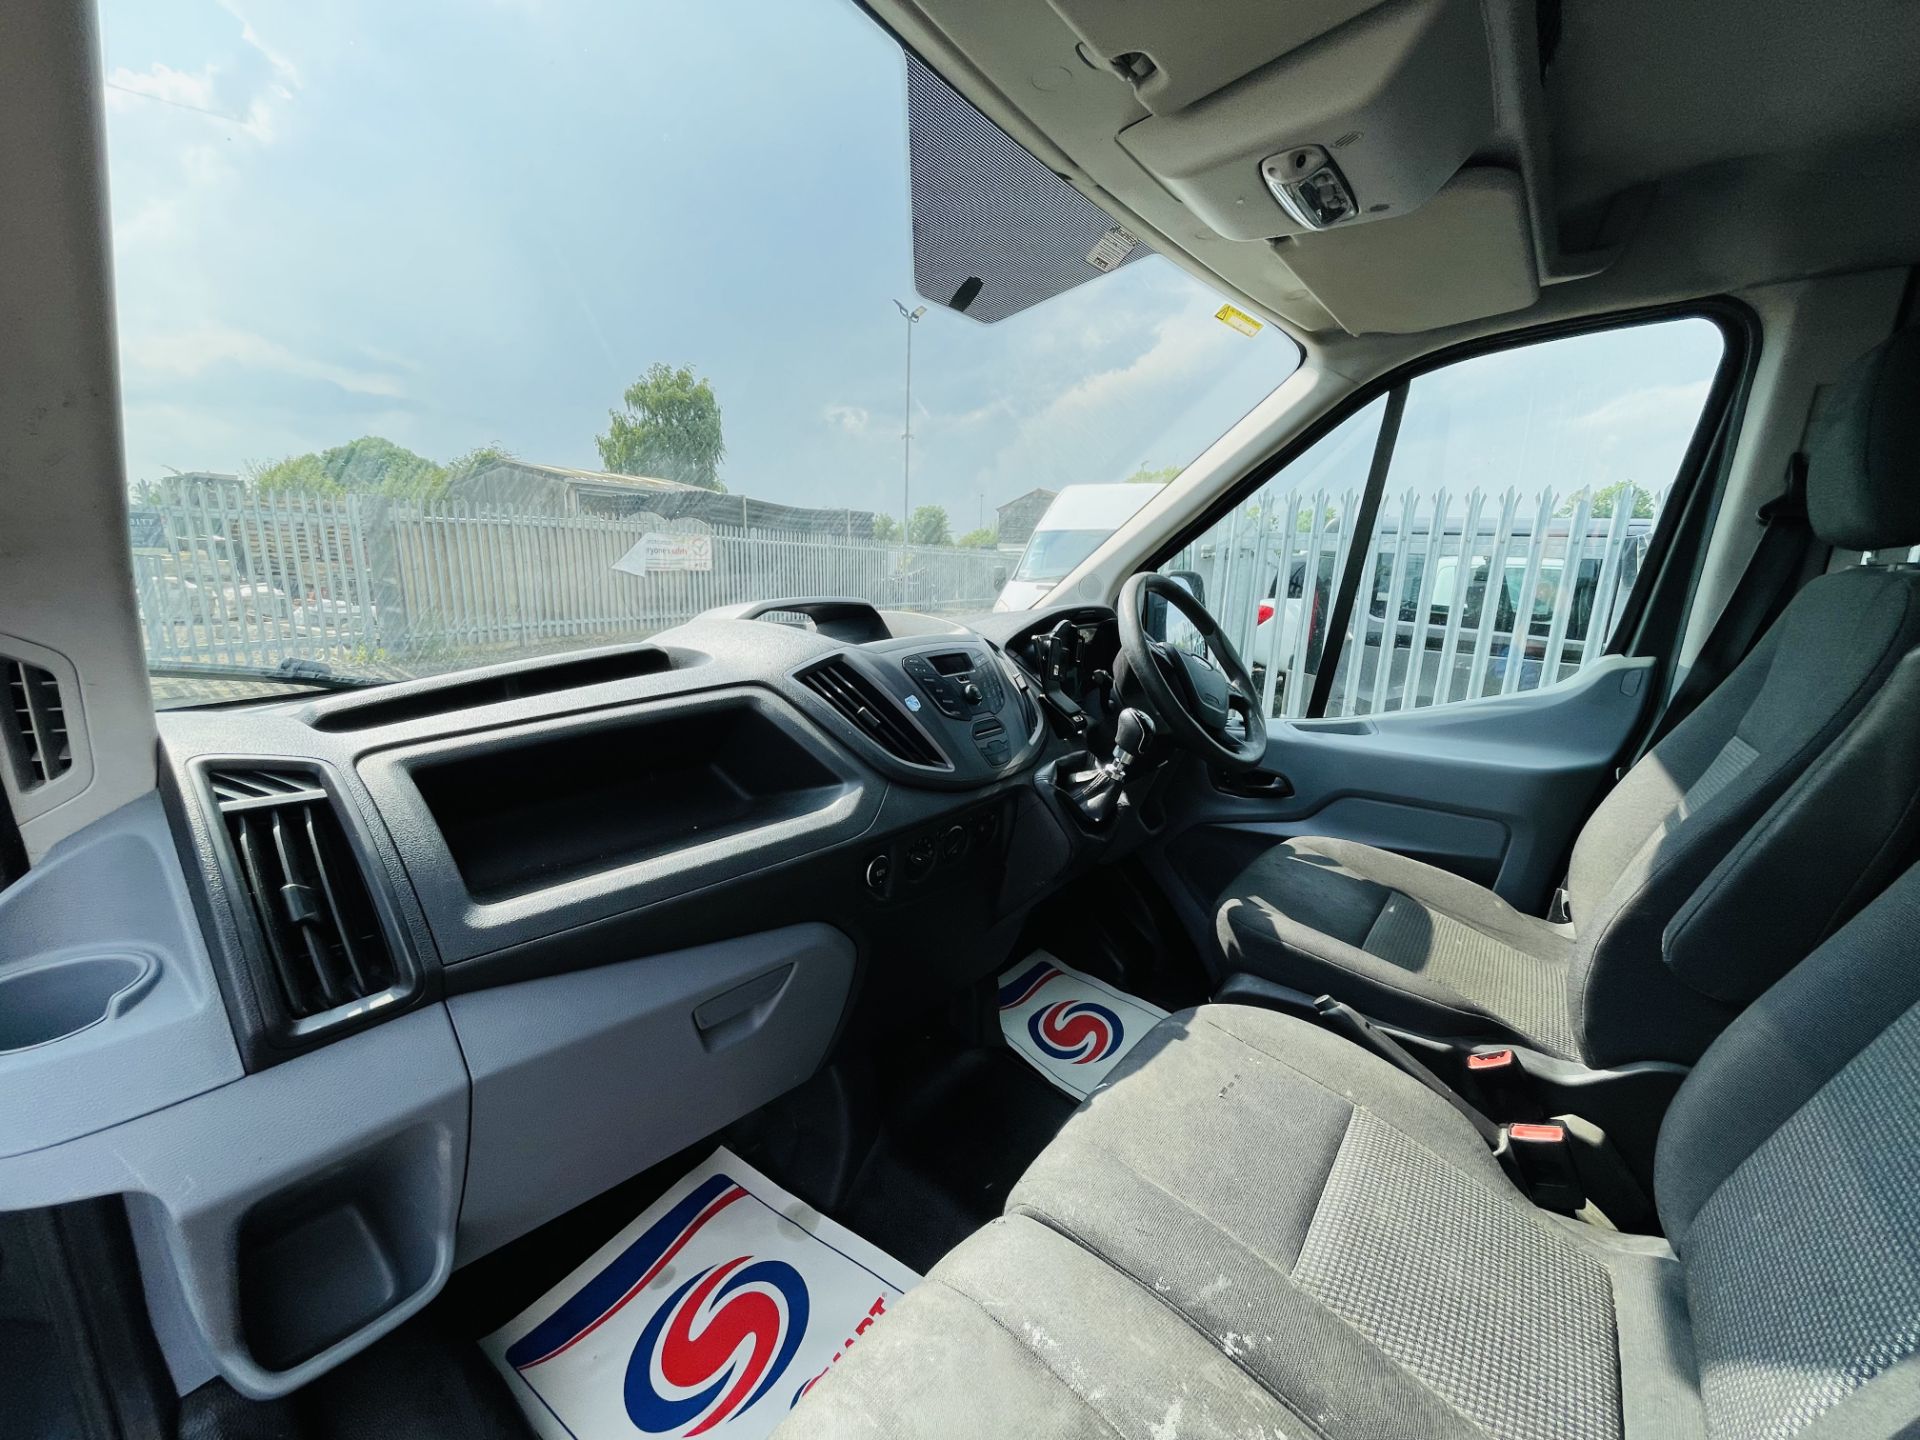 Ford Transit 2.2 TDCI 100 L3 H2 T350 2015 '65 Reg' - Panel Van - LCV - Grey - Image 4 of 14